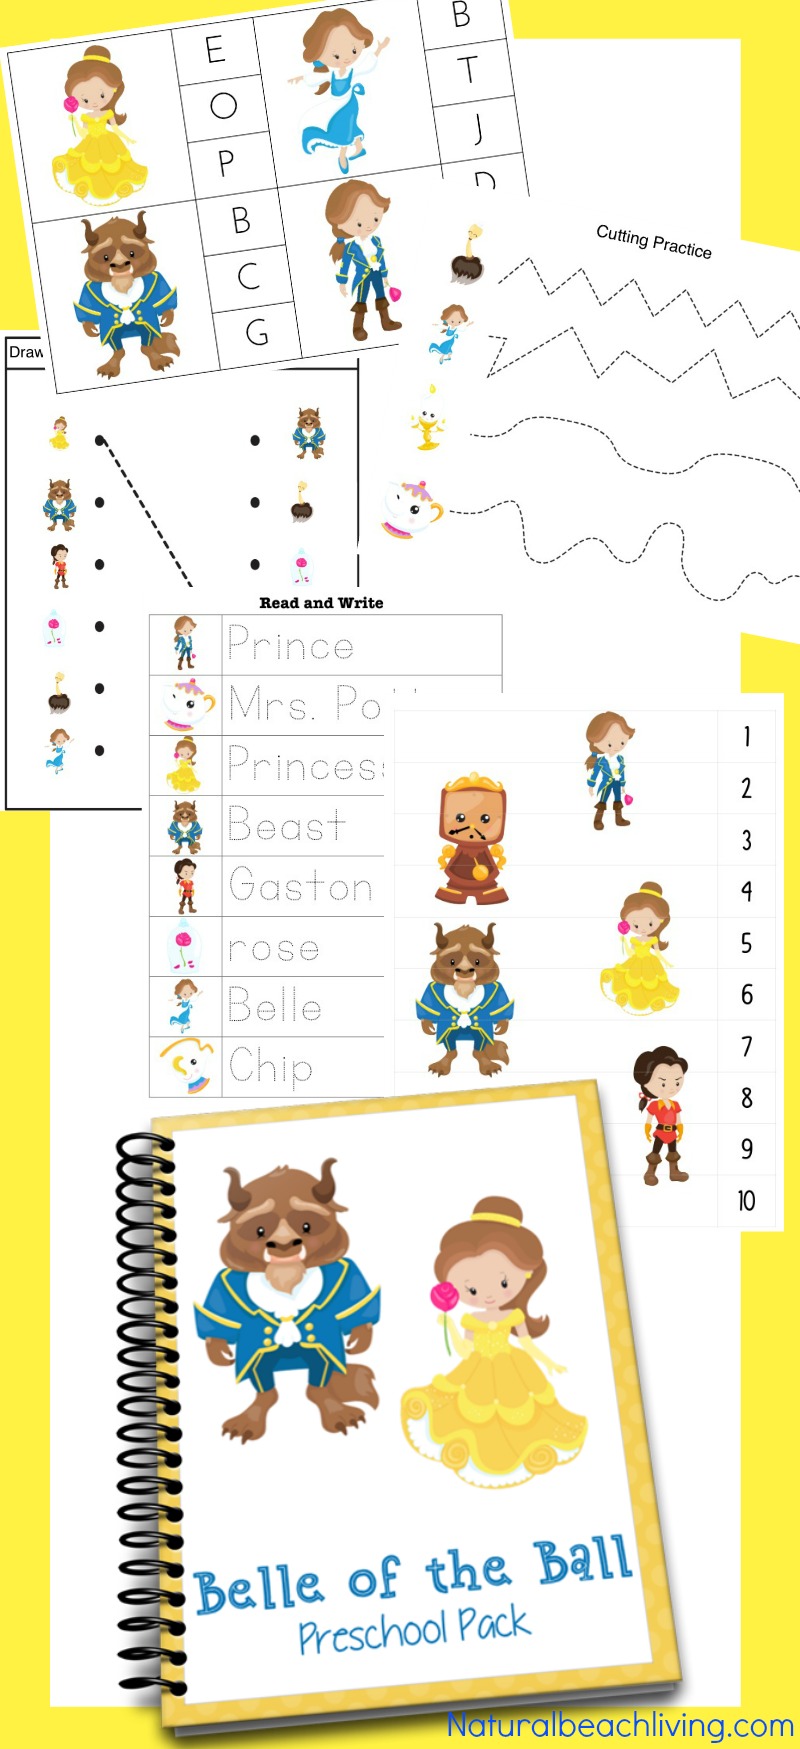 Beauty And The Beast Printables For Preschool Kindergarten Natural Beach Living